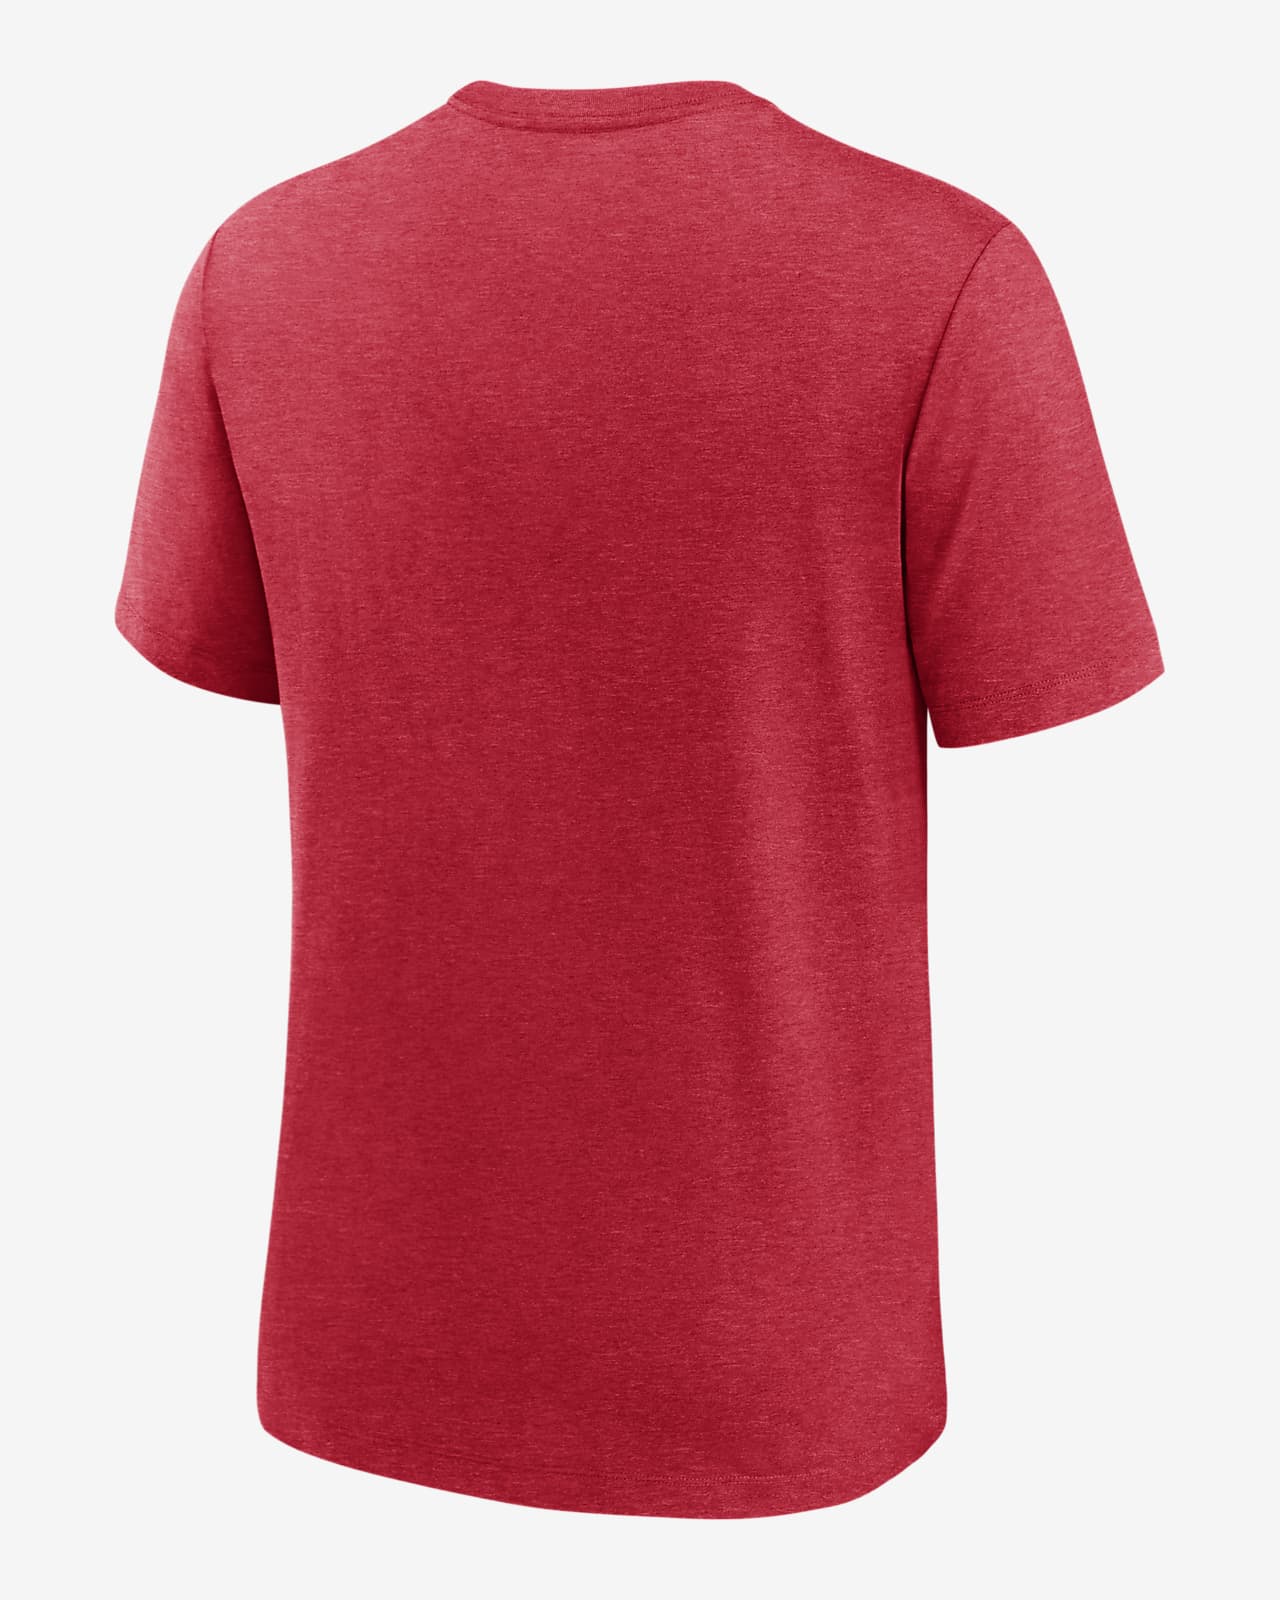 Camiseta de béisbol Cooperstown para hombre MLB Cincinnati Reds.